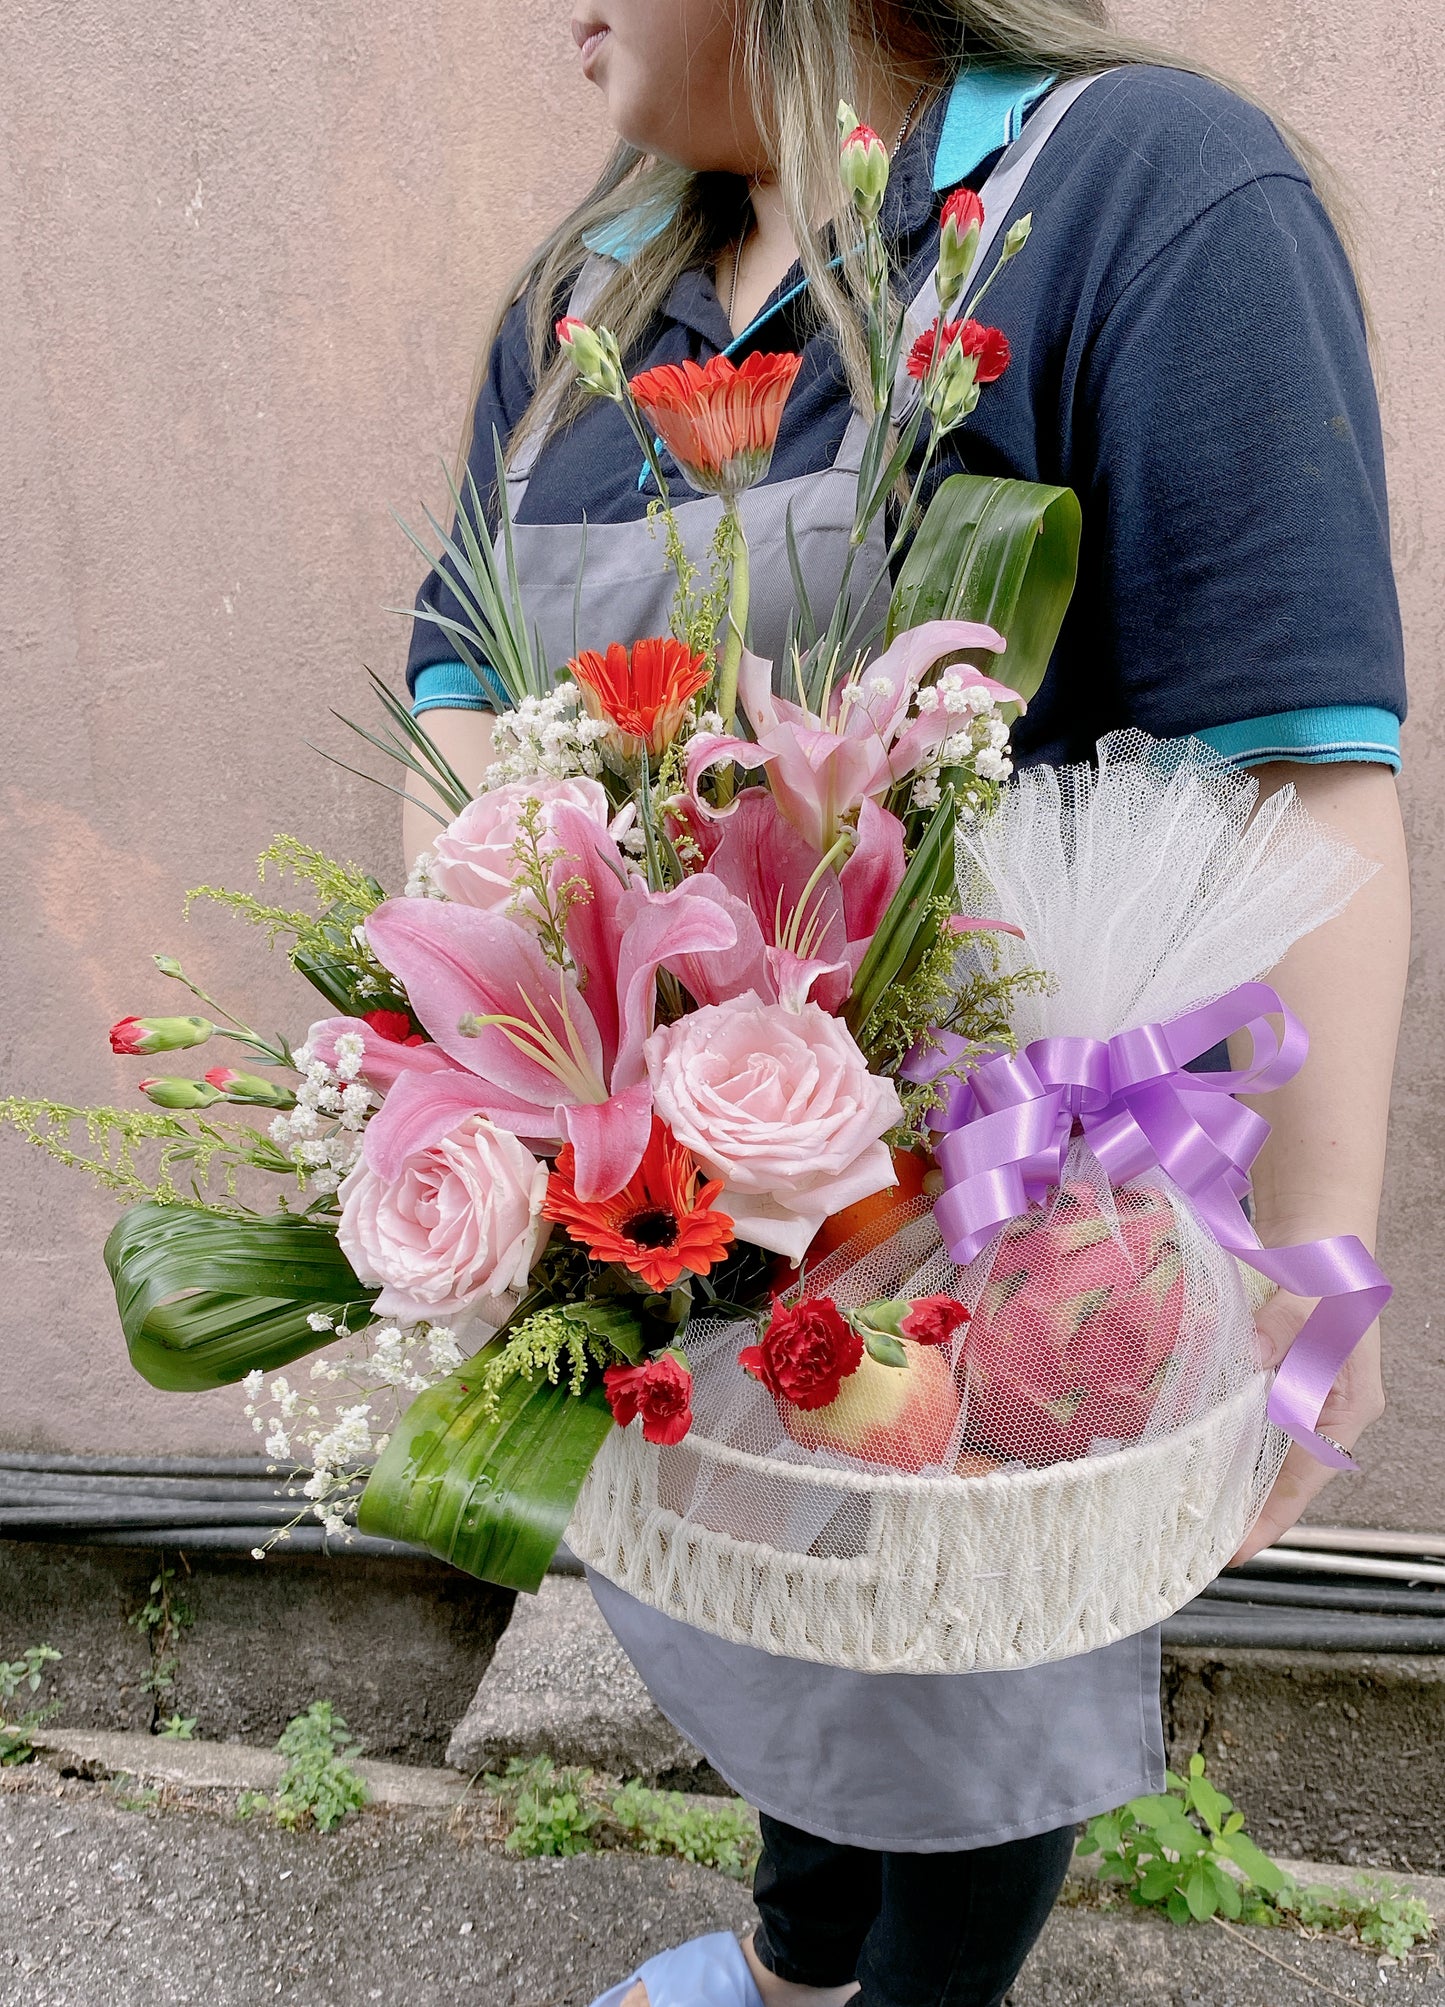 Fruit & Flower Basket 99 (RM 100.00)